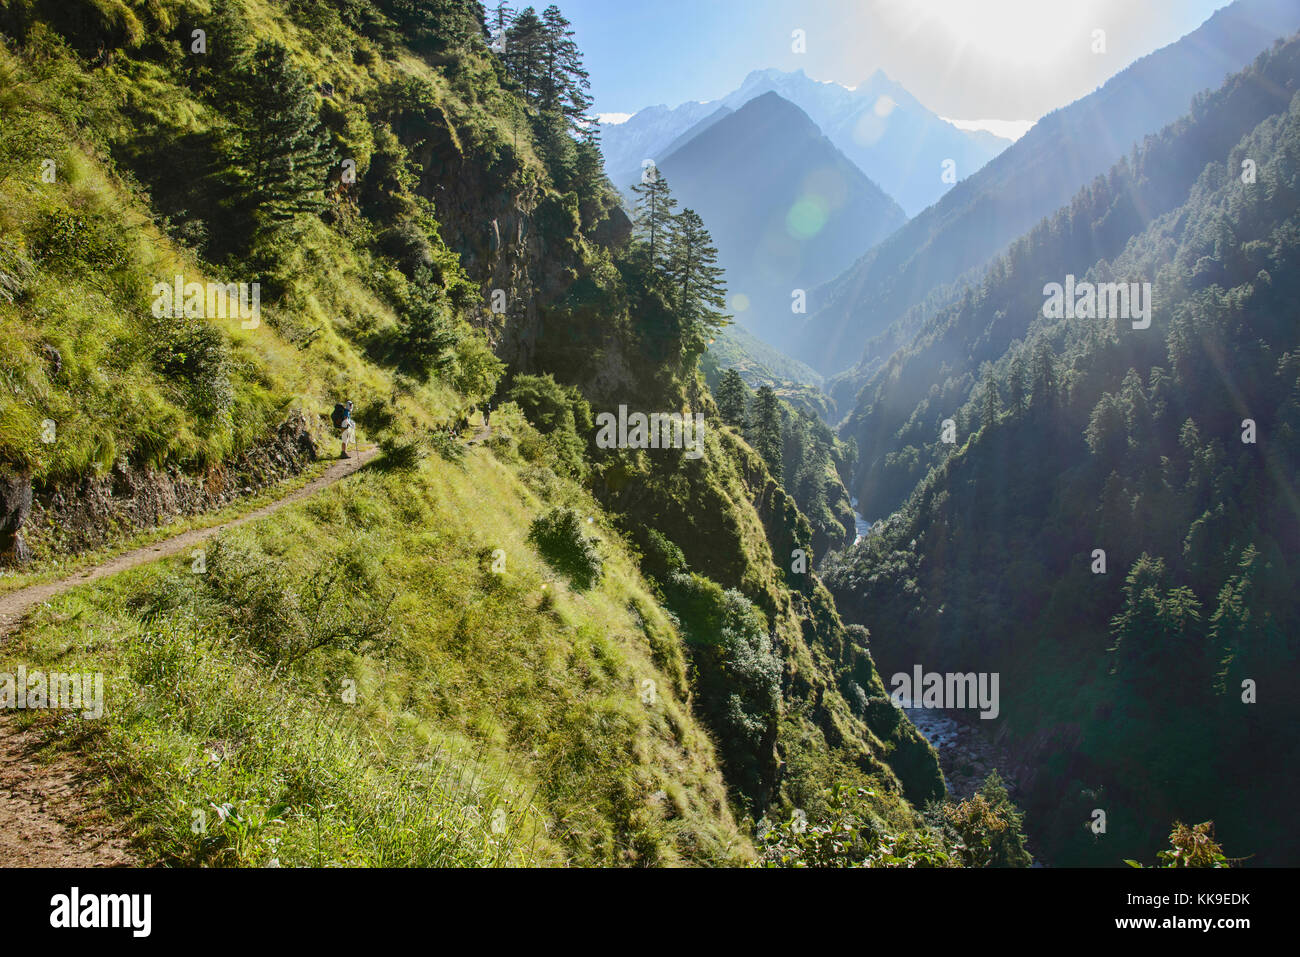 Rishi Khola Reshi River Khola in Nepali Meaning a Small Stream Stock Photo  - Image of resorts, name: 128497532